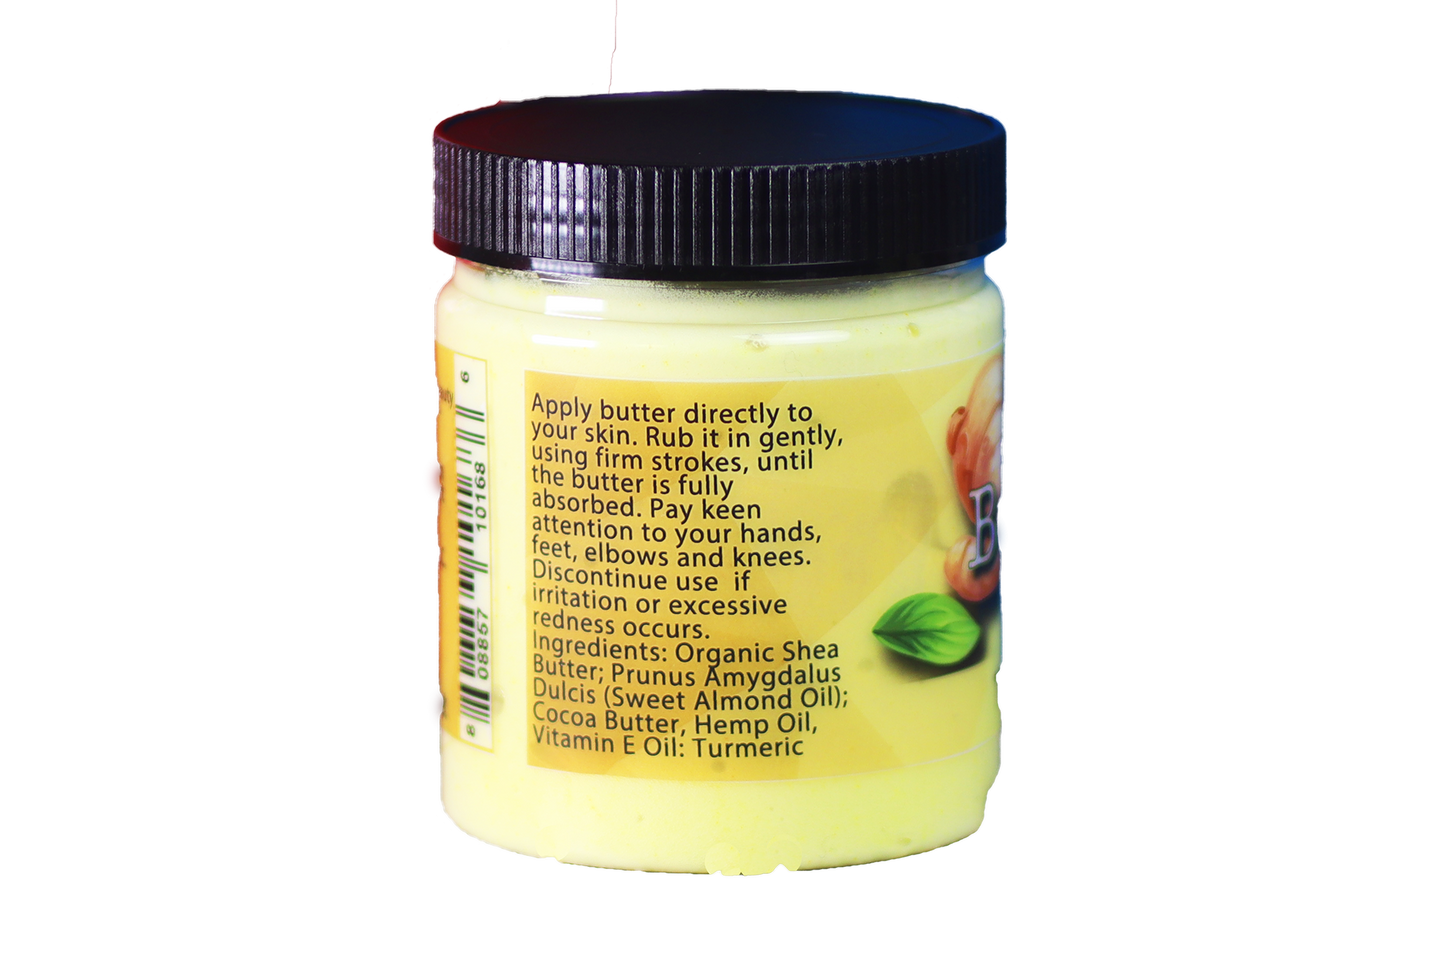 Whipped Body Butter 100% Organic | Habbie Beauty Supplies - Habbie Enterprise